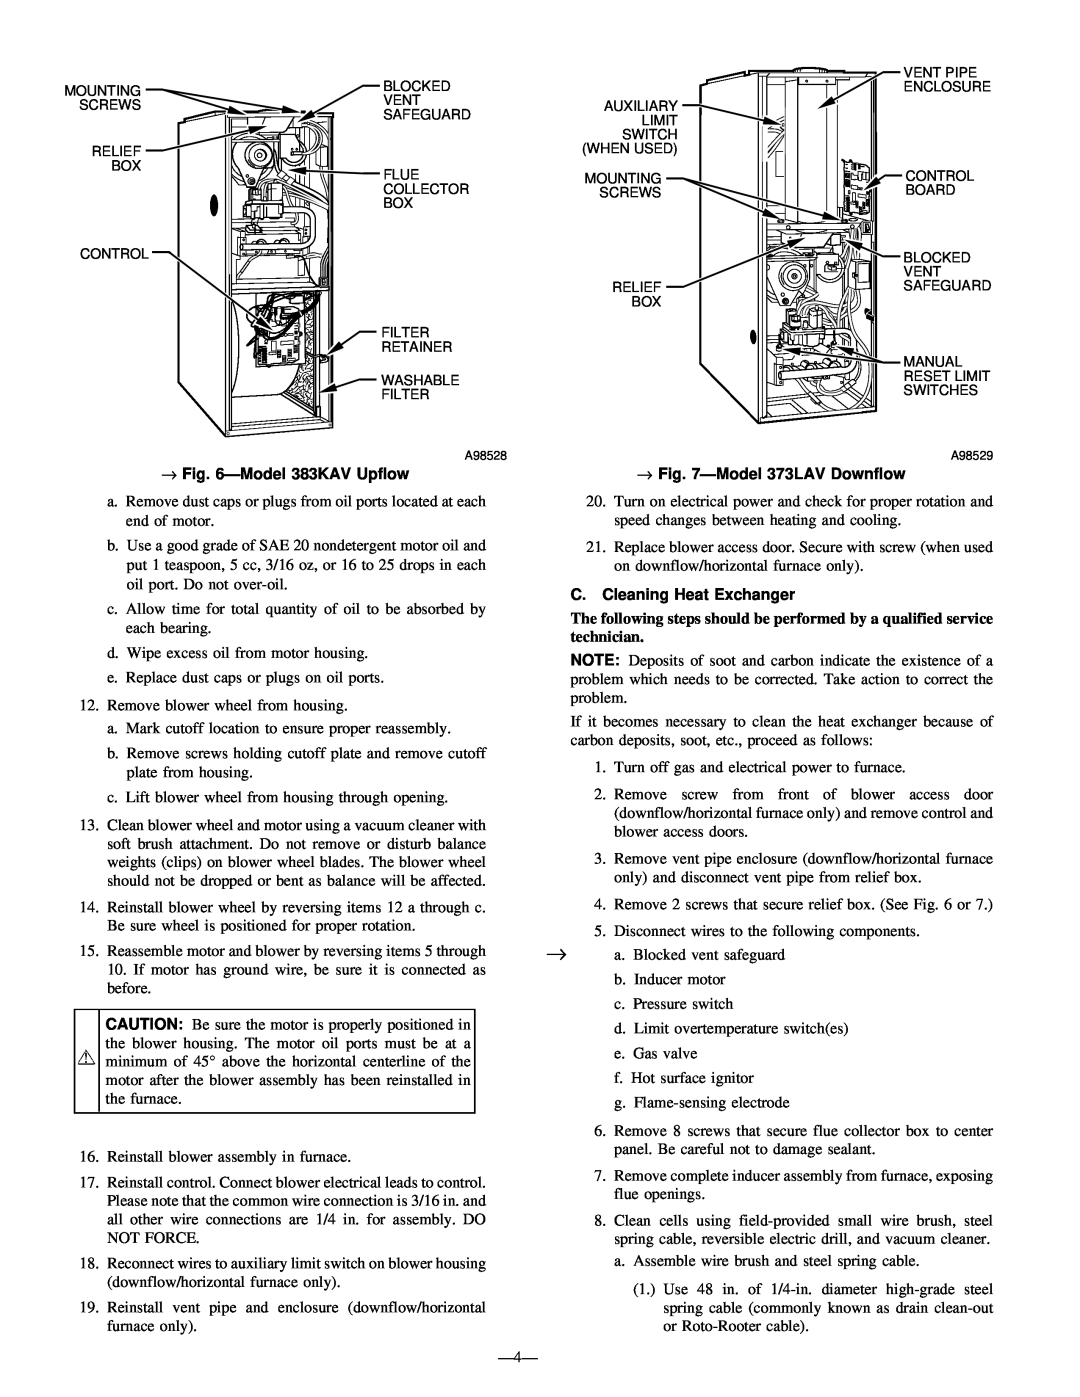 Bryant instruction manual → ÐModel 383KAV Upflow, → ÐModel 373LAV Downflow, C.Cleaning Heat Exchanger 